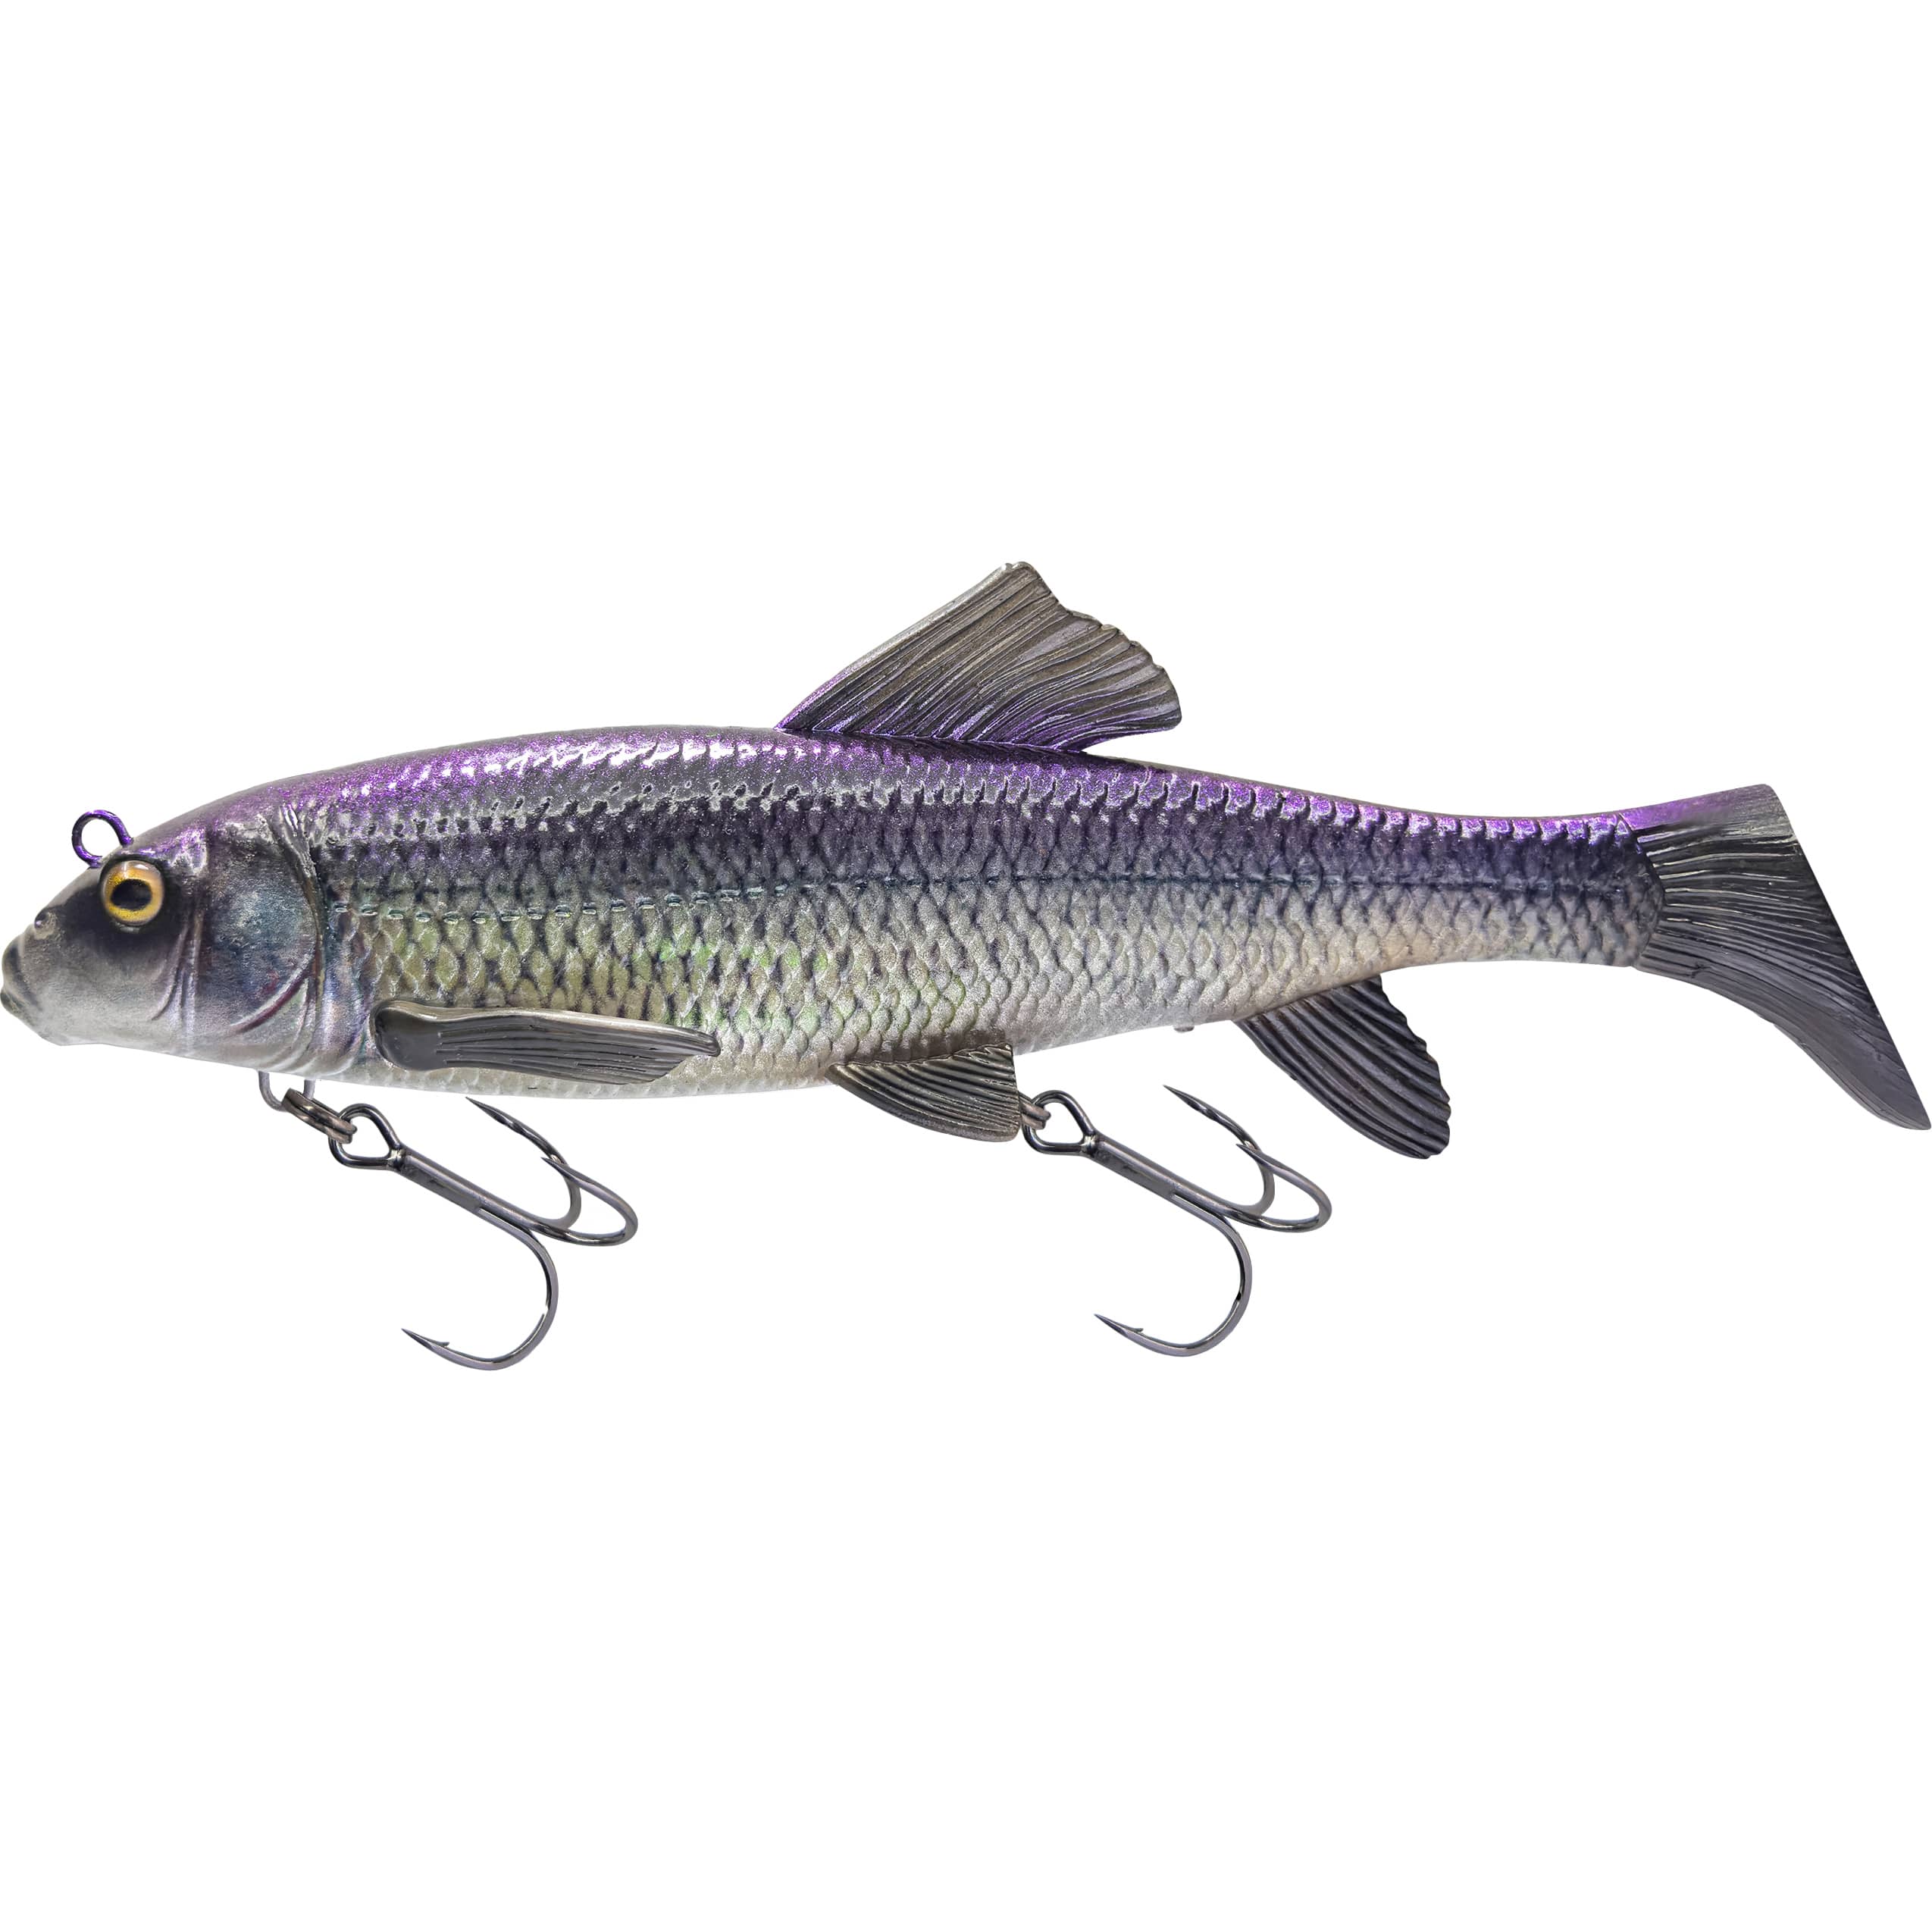  Savage Gear 3D Hybrid Pike Fishing Bait, 4 1/2 oz